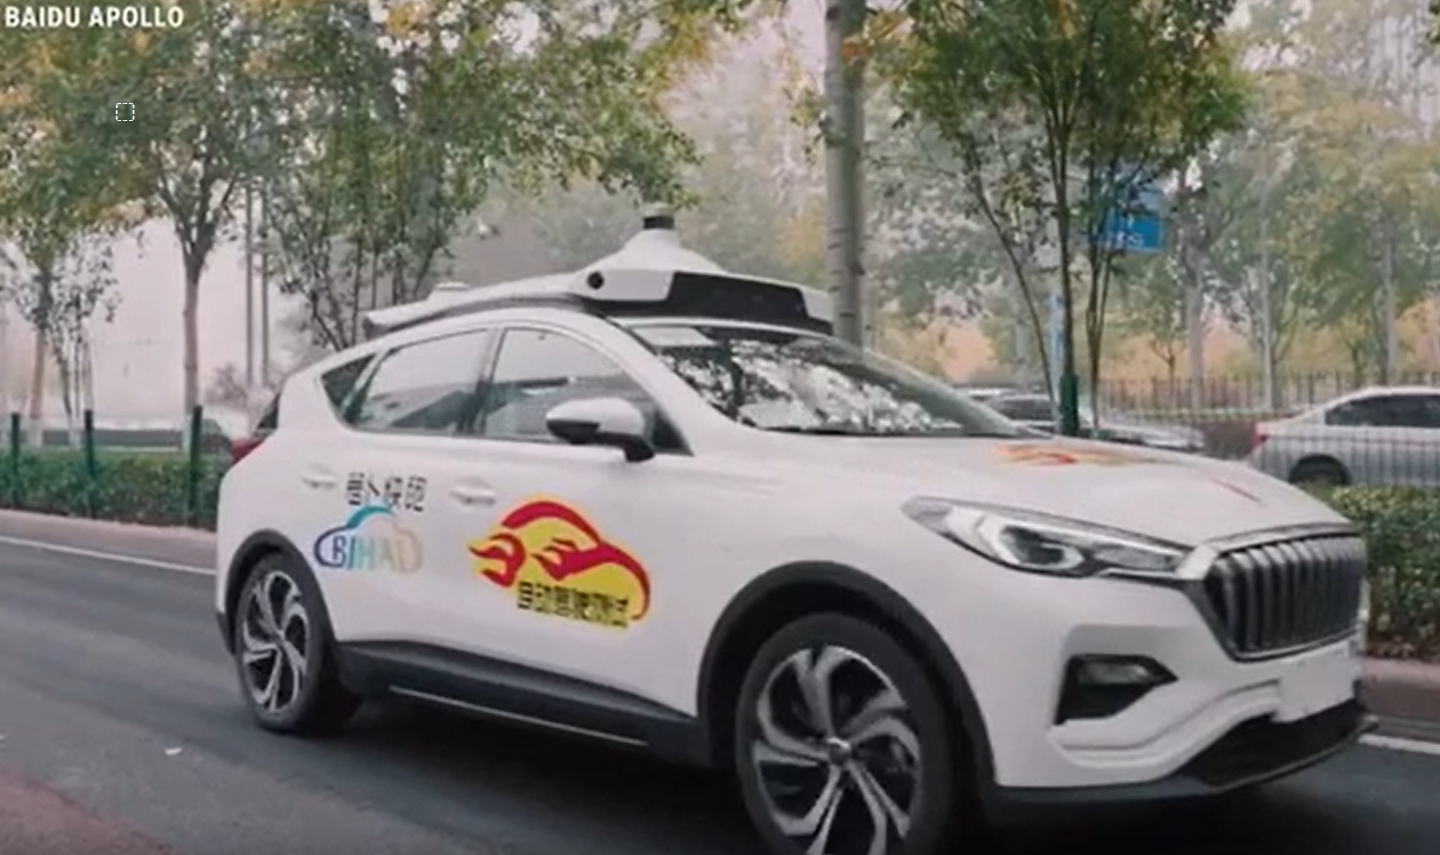 Baidu Races Ahead of Tesla With Launch of Robotaxi With Detachable Steering Wheel